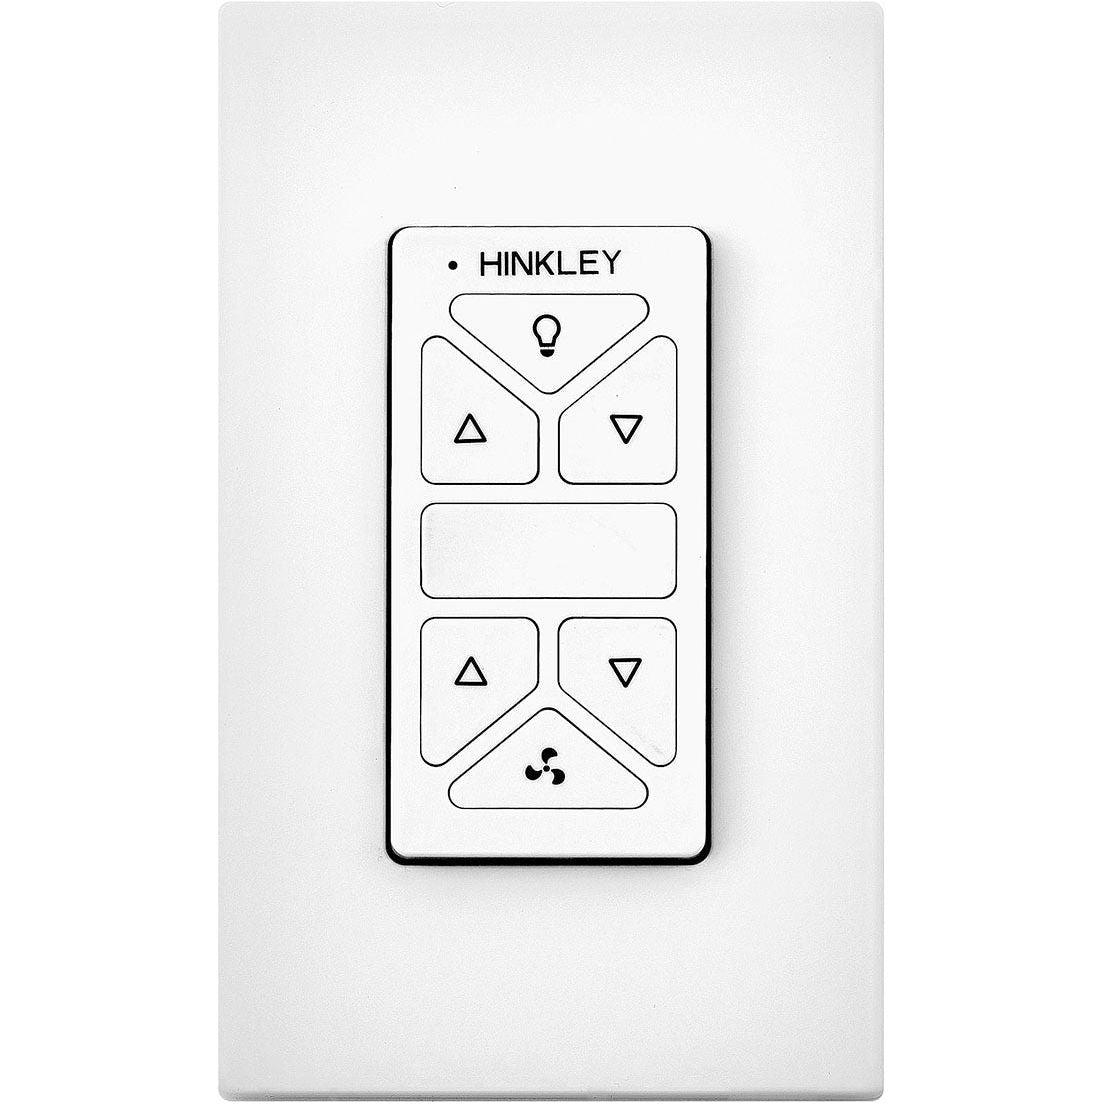 Hinkley - Universal Remote Control - Lights Canada